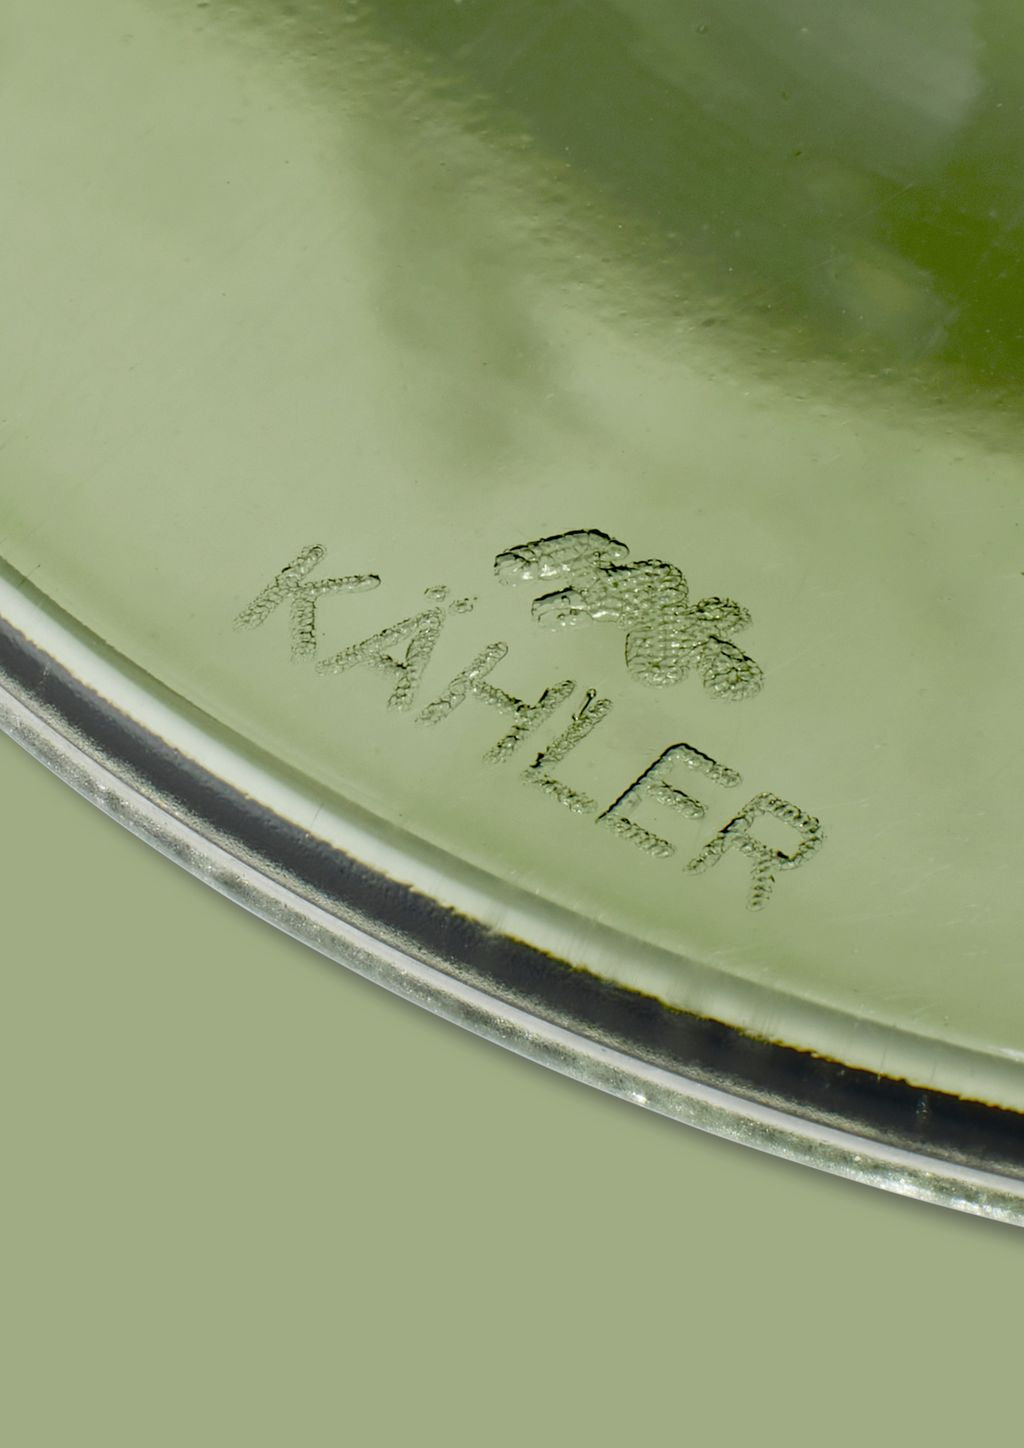 Kähler Hammershøi Copa de vino blanco 35 Cl, verde 2 p cs.